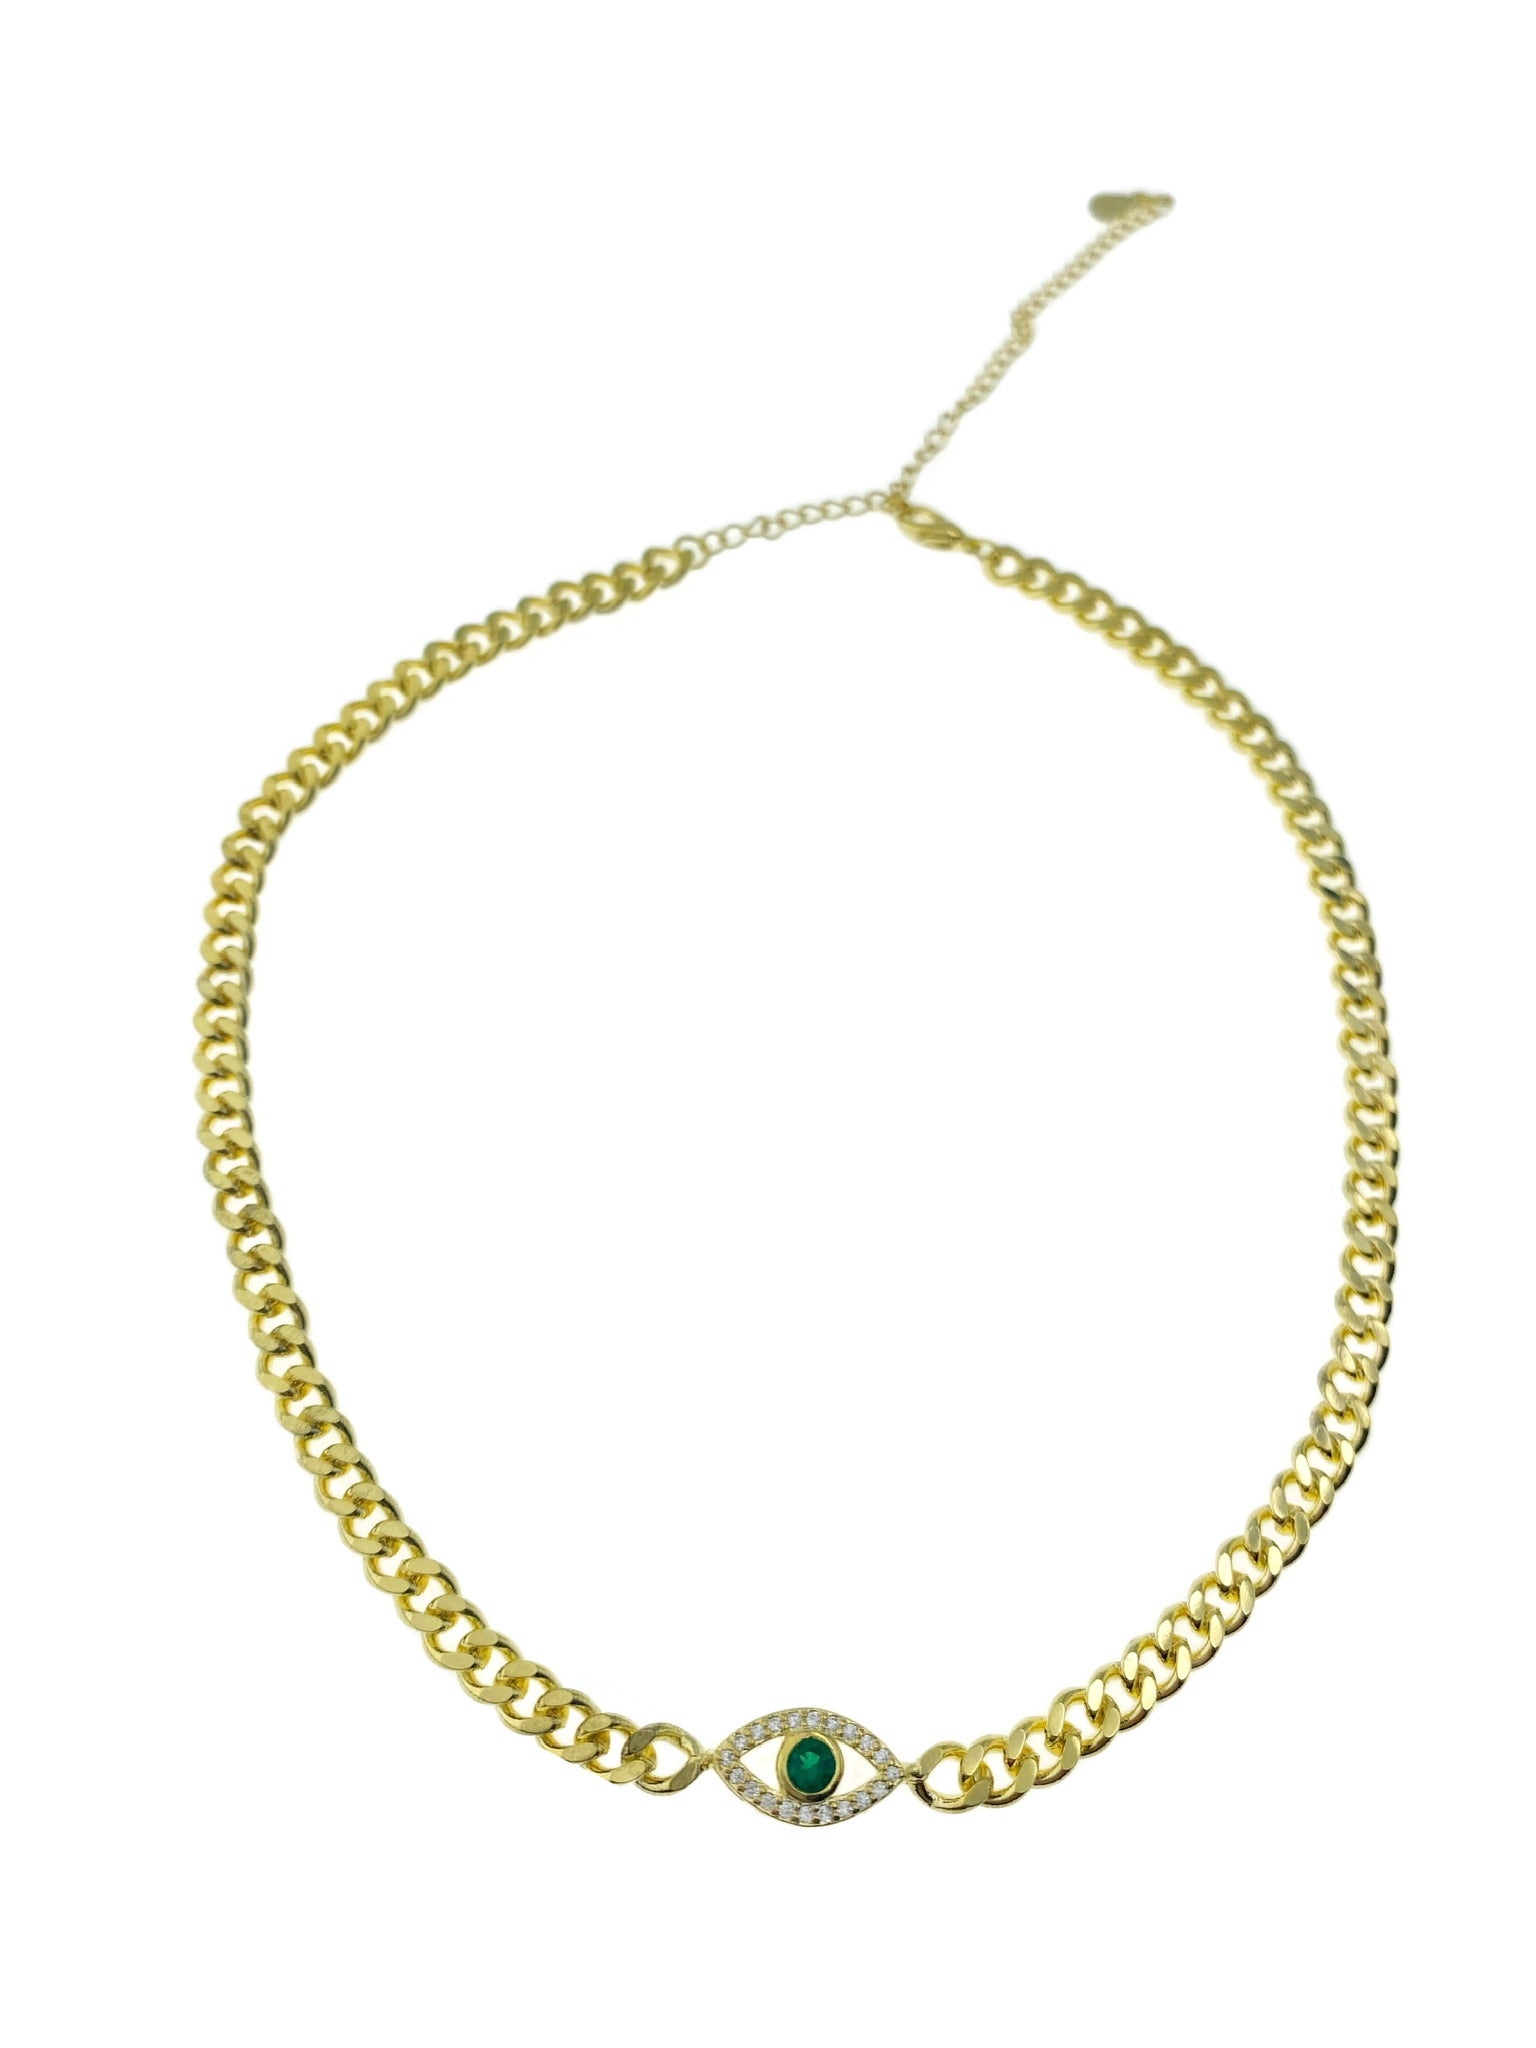 Emerald eye chain choker necklace full view